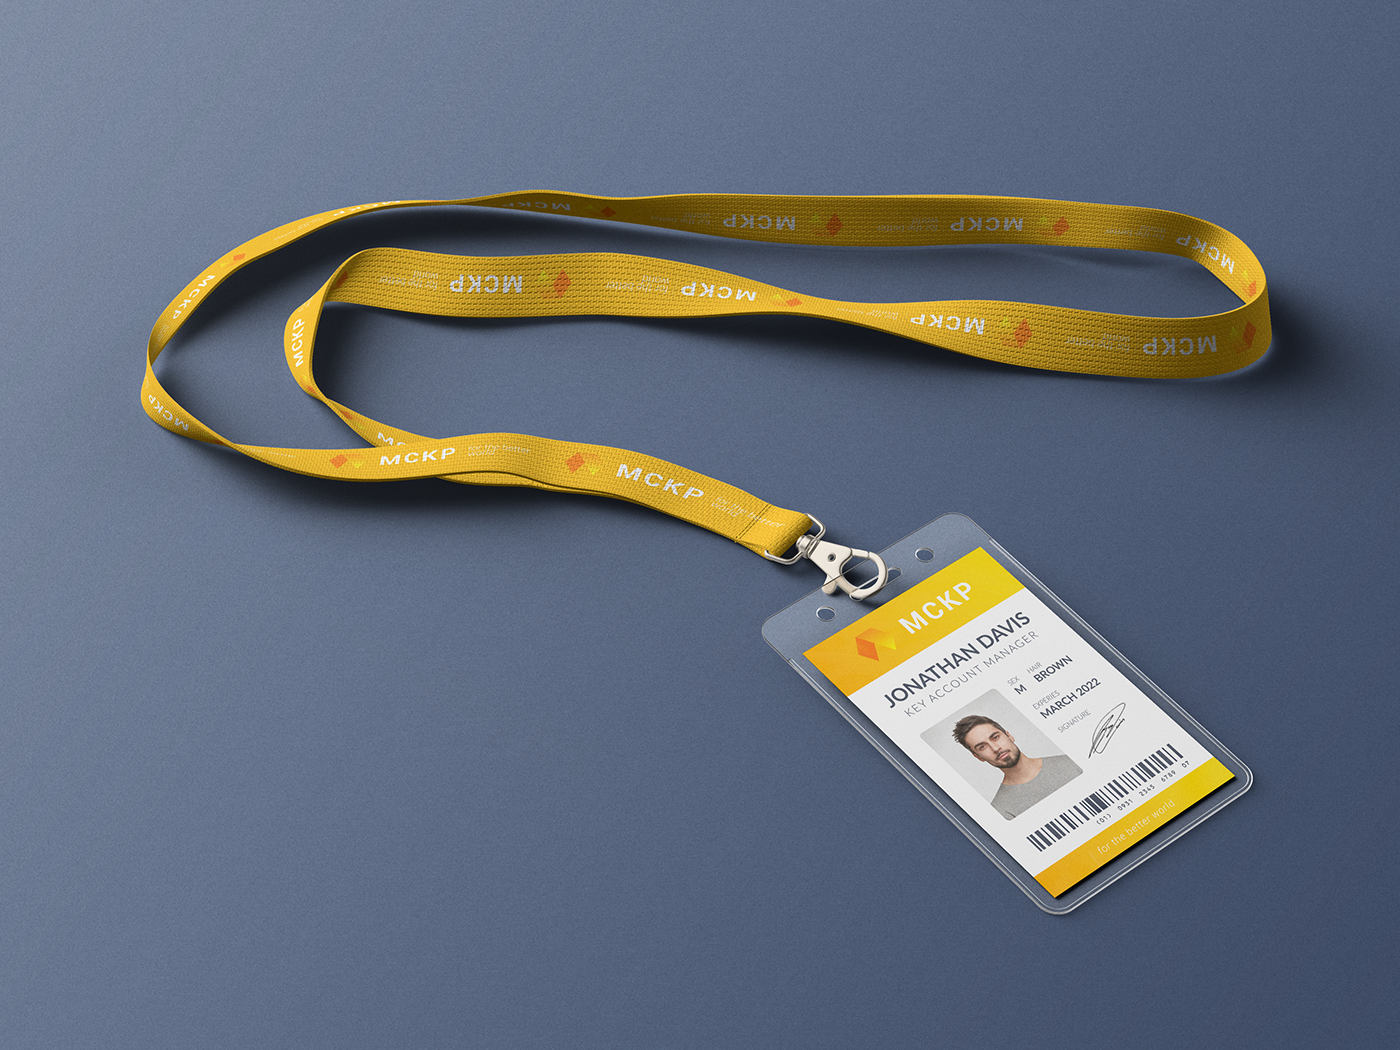 Lanyard badge Mockup psd freebie free idcard card holder neck